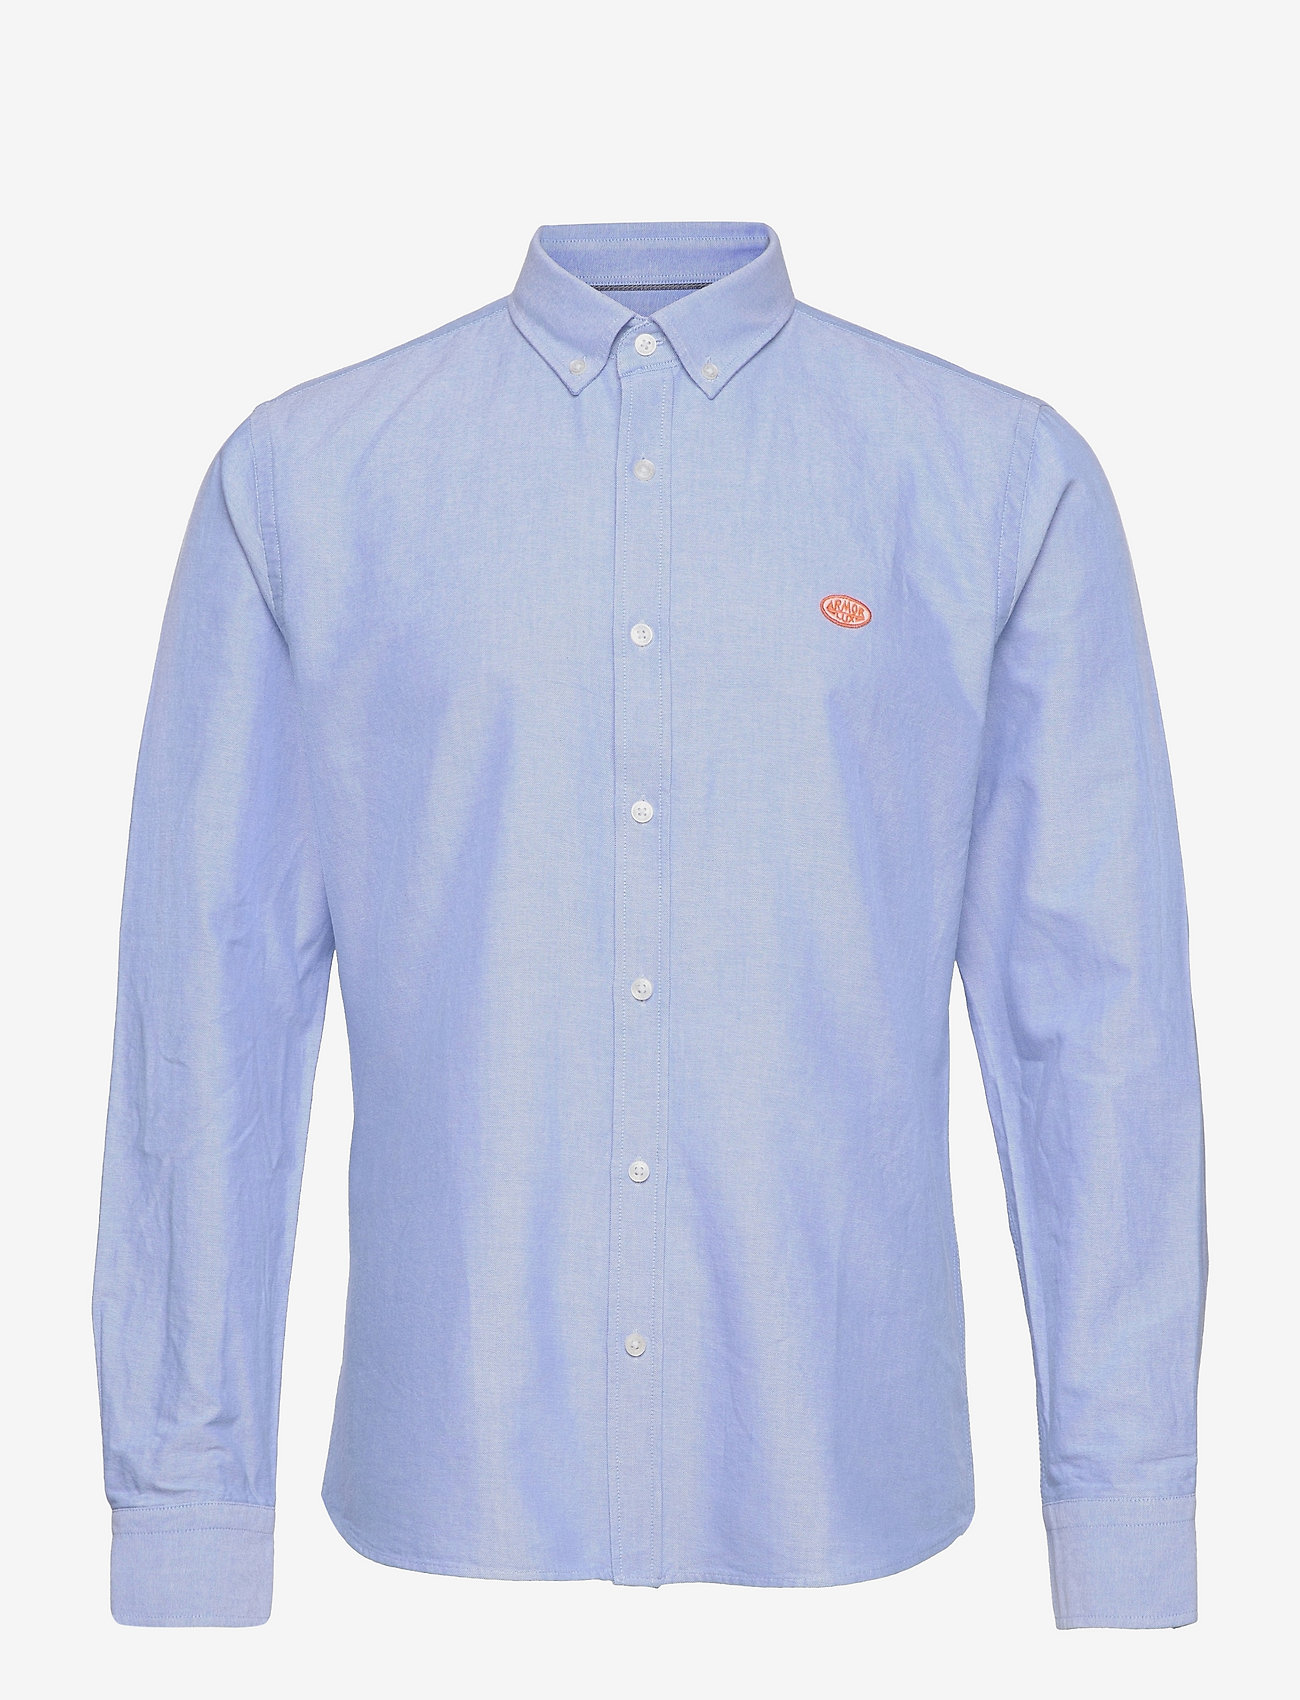 Armor Lux - Oxford shirt - oxford shirts - light blue - 0